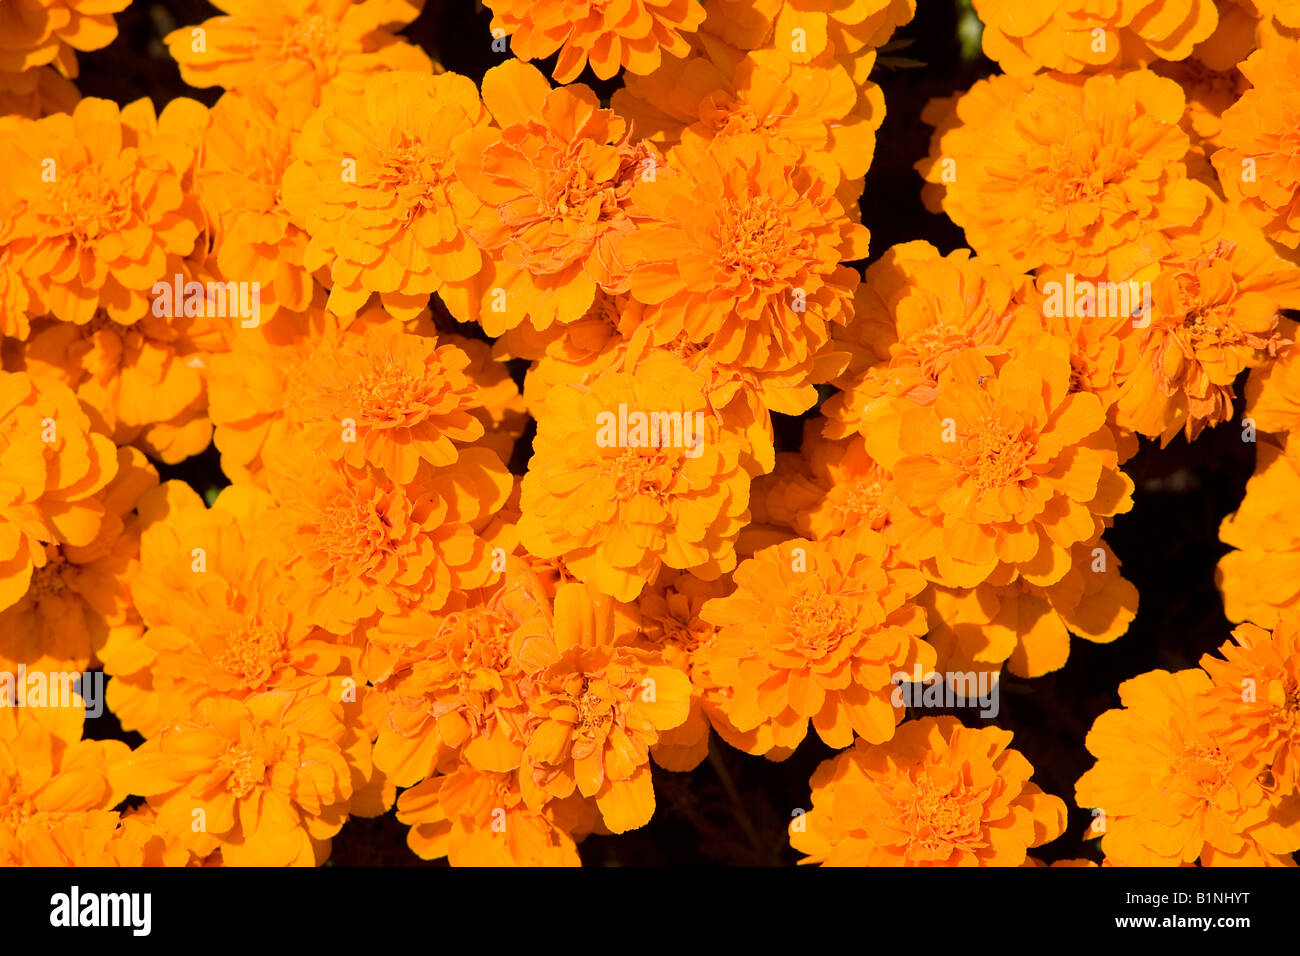 flower bed of orange french marigolds Stock Photo